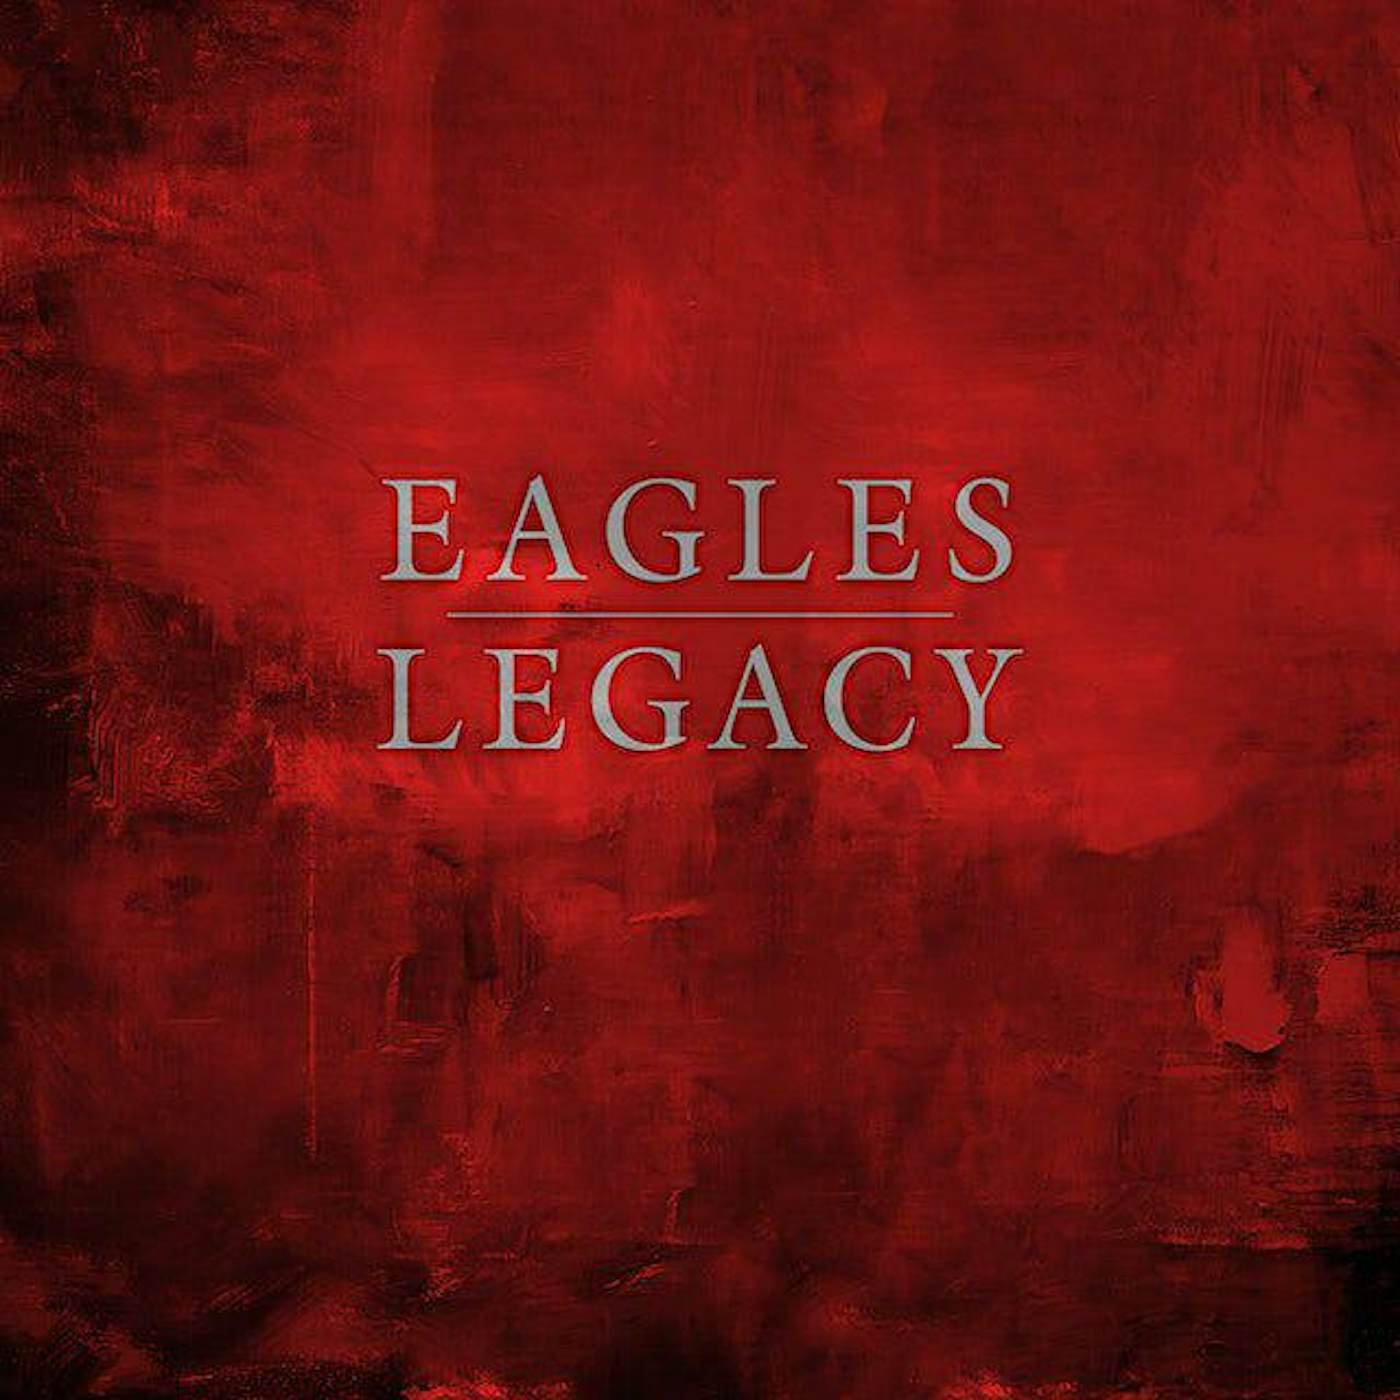 Eagles Legacy (15LP / Box Set) Vinyl Record